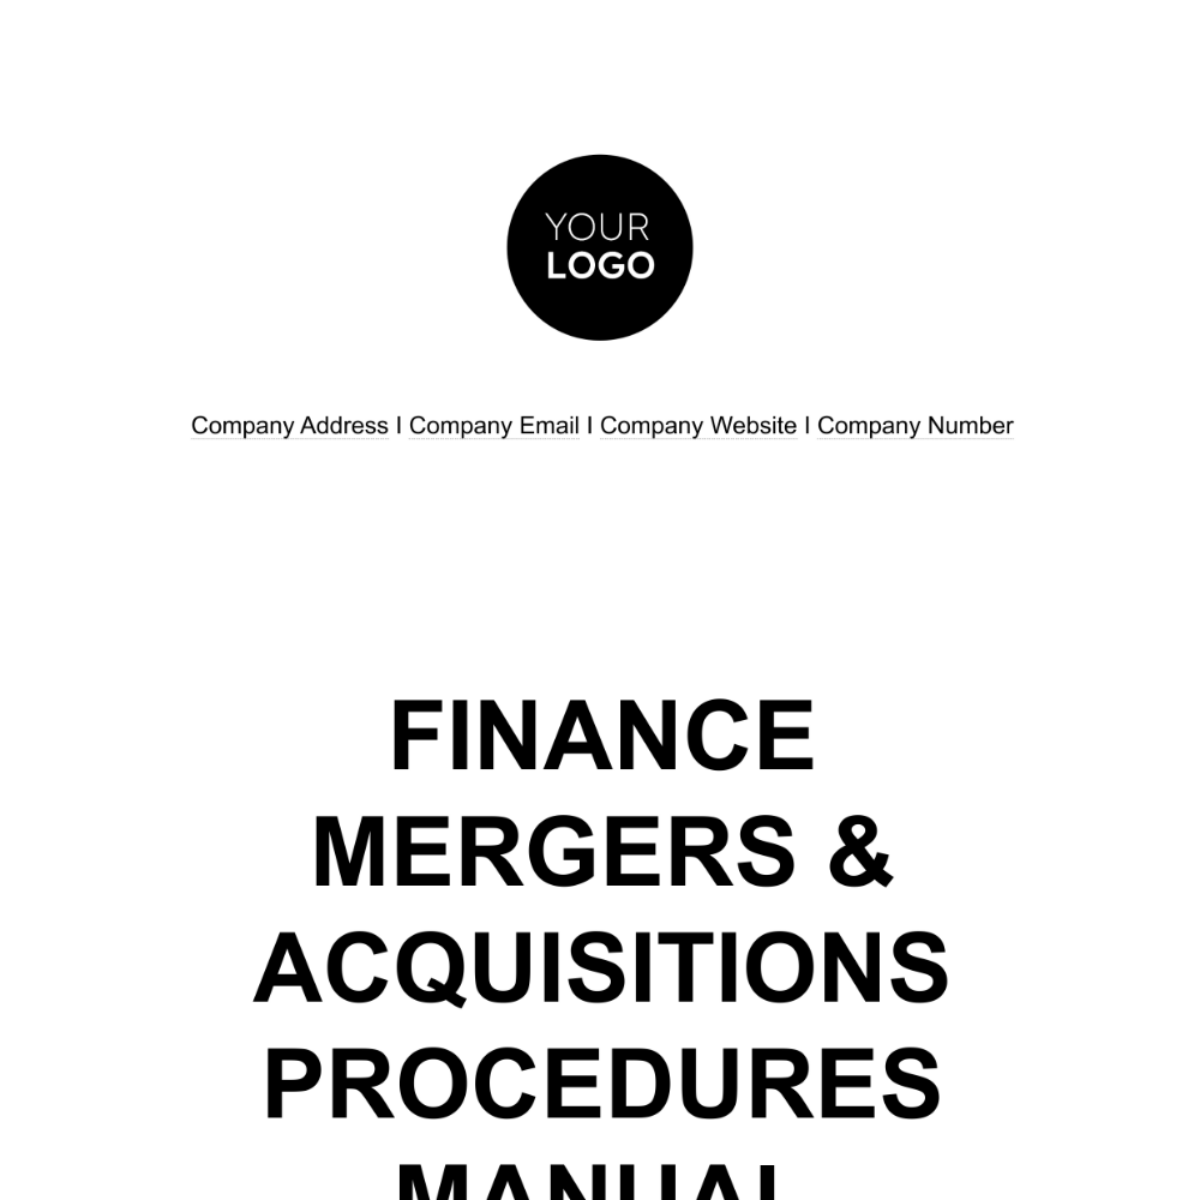 Finance Mergers & Acquisitions Procedures Manual Template